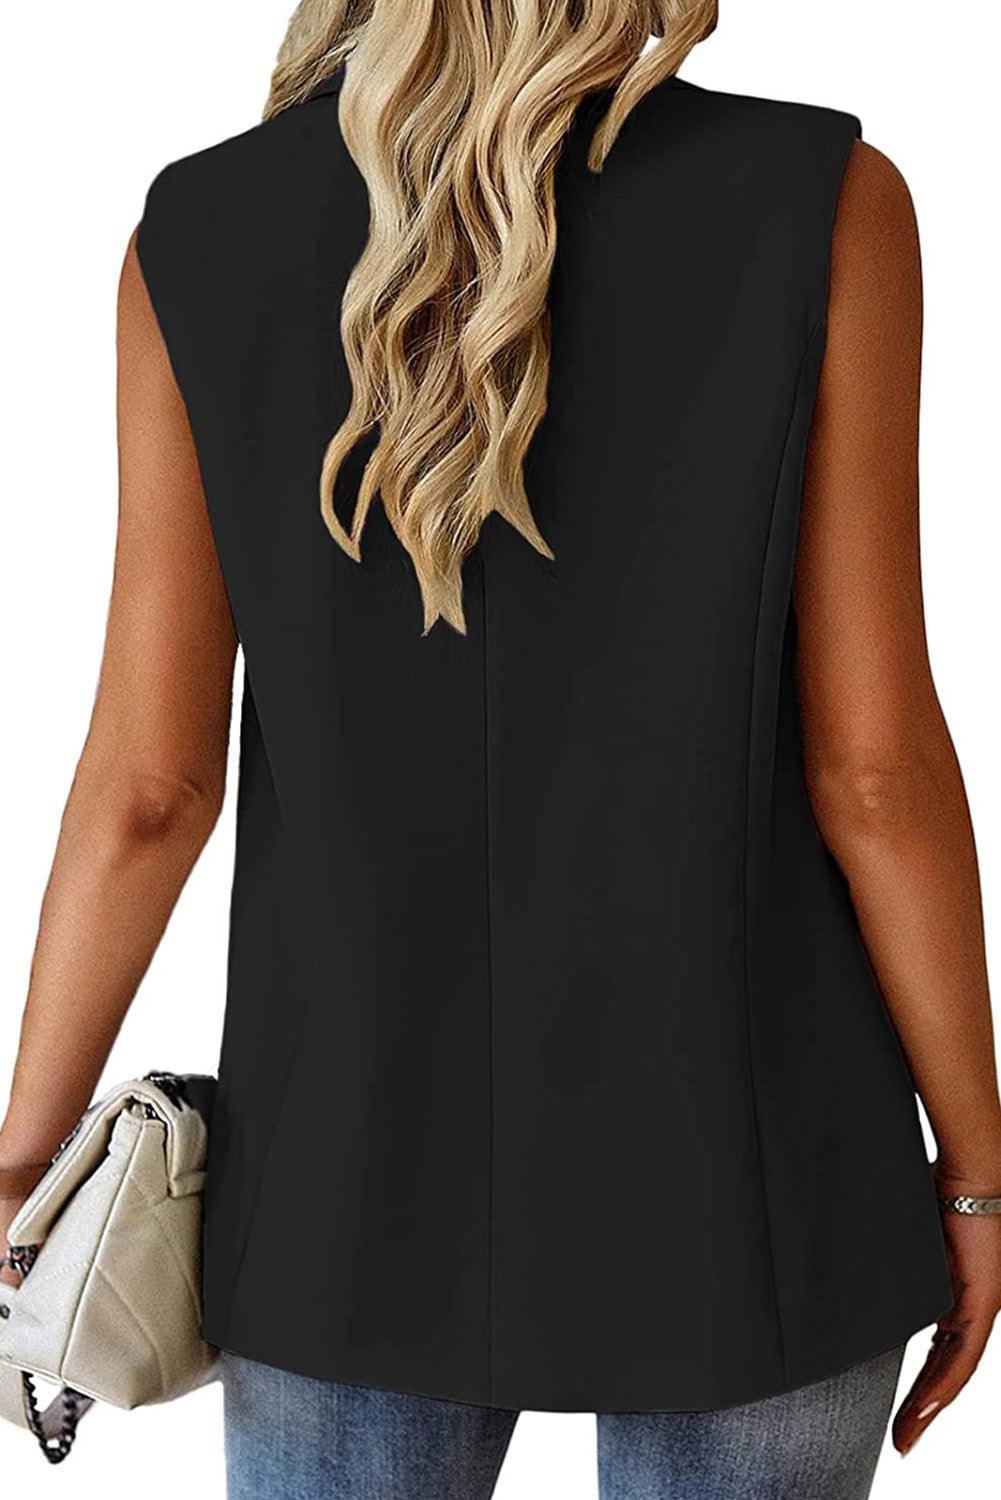 Black Single Button Pocketed Lapel Vest Blazer - L & M Kee, LLC